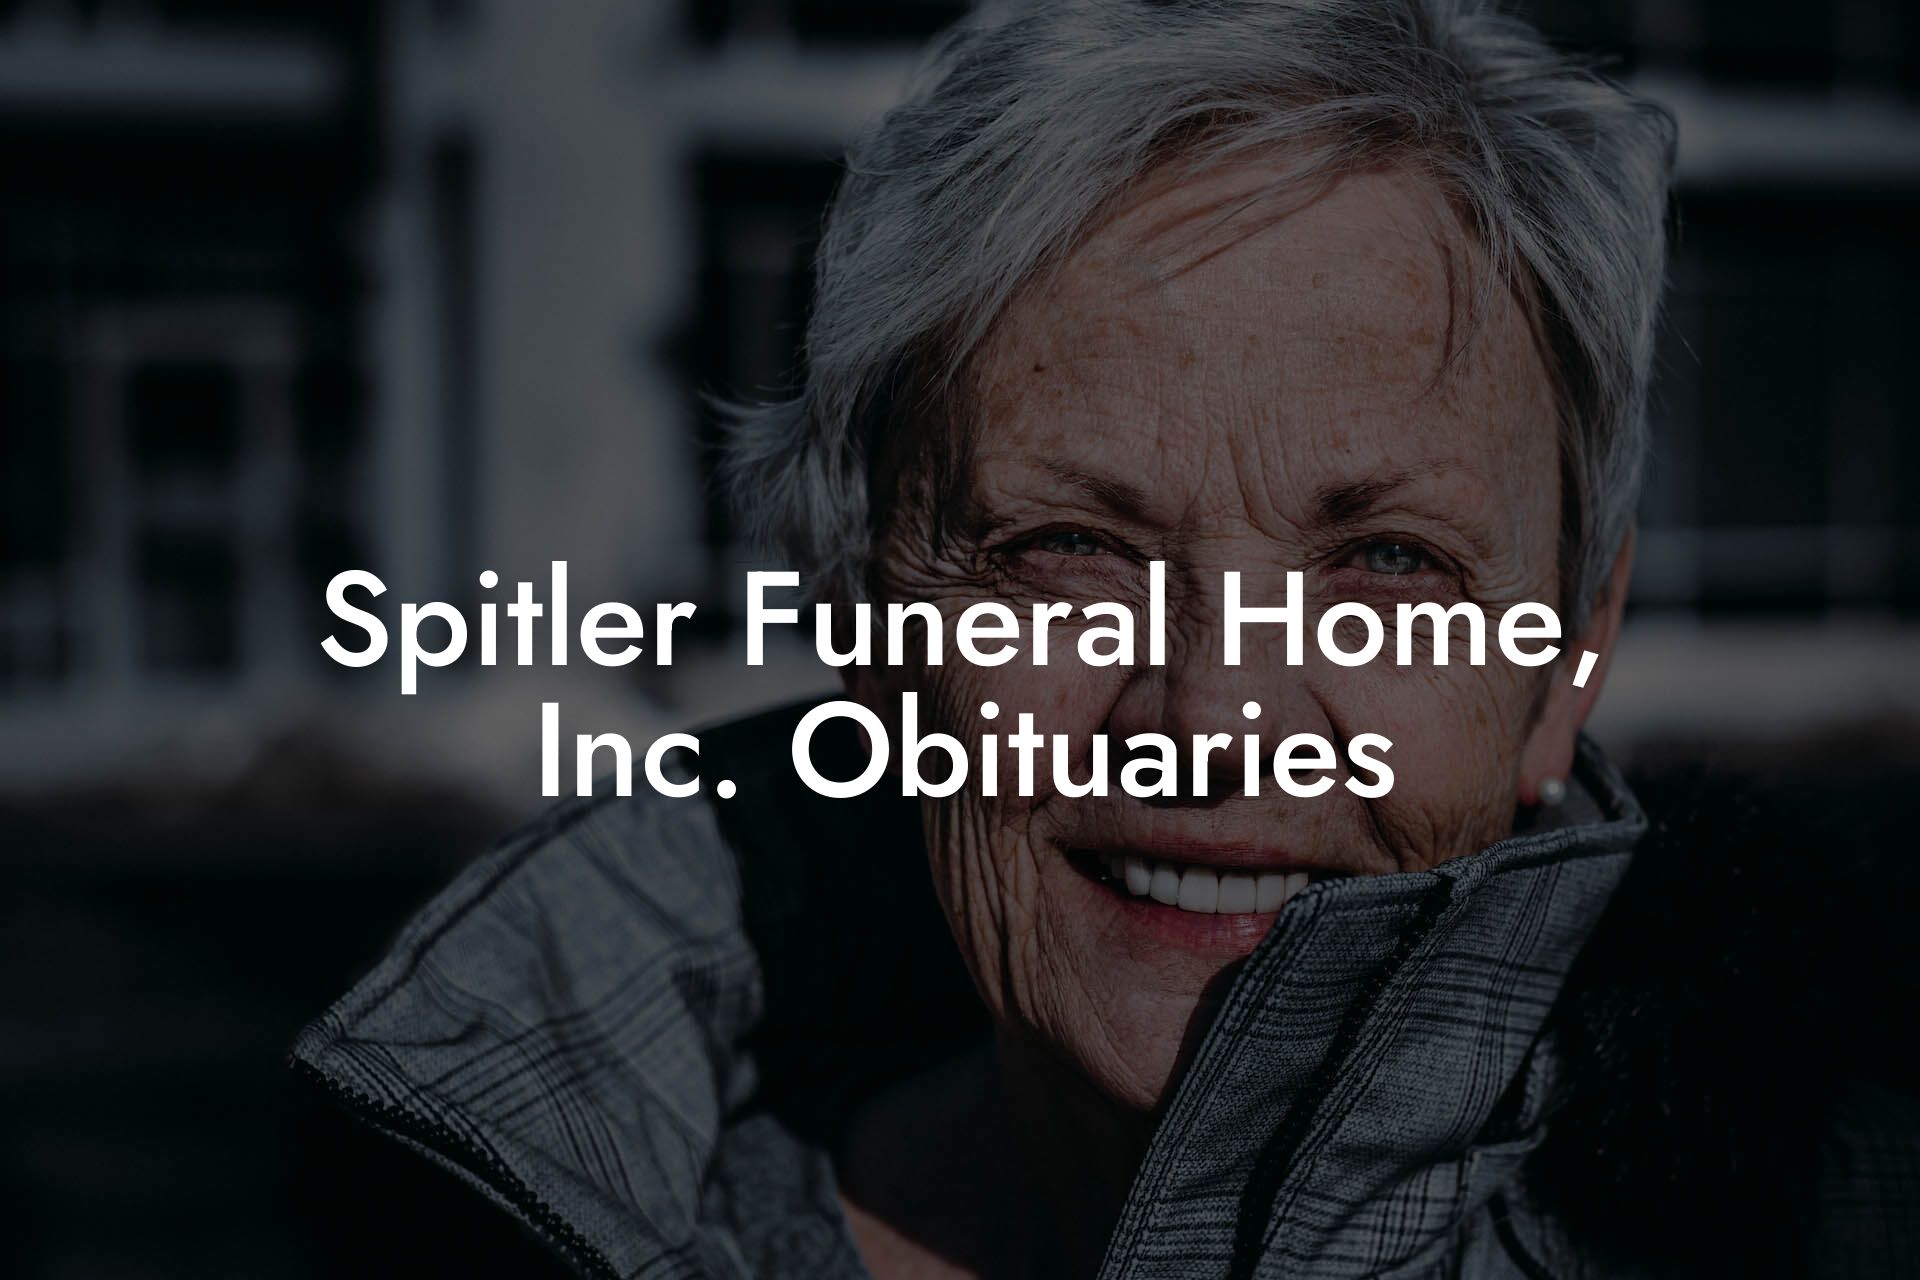 Spitler Funeral Home, Inc. Obituaries